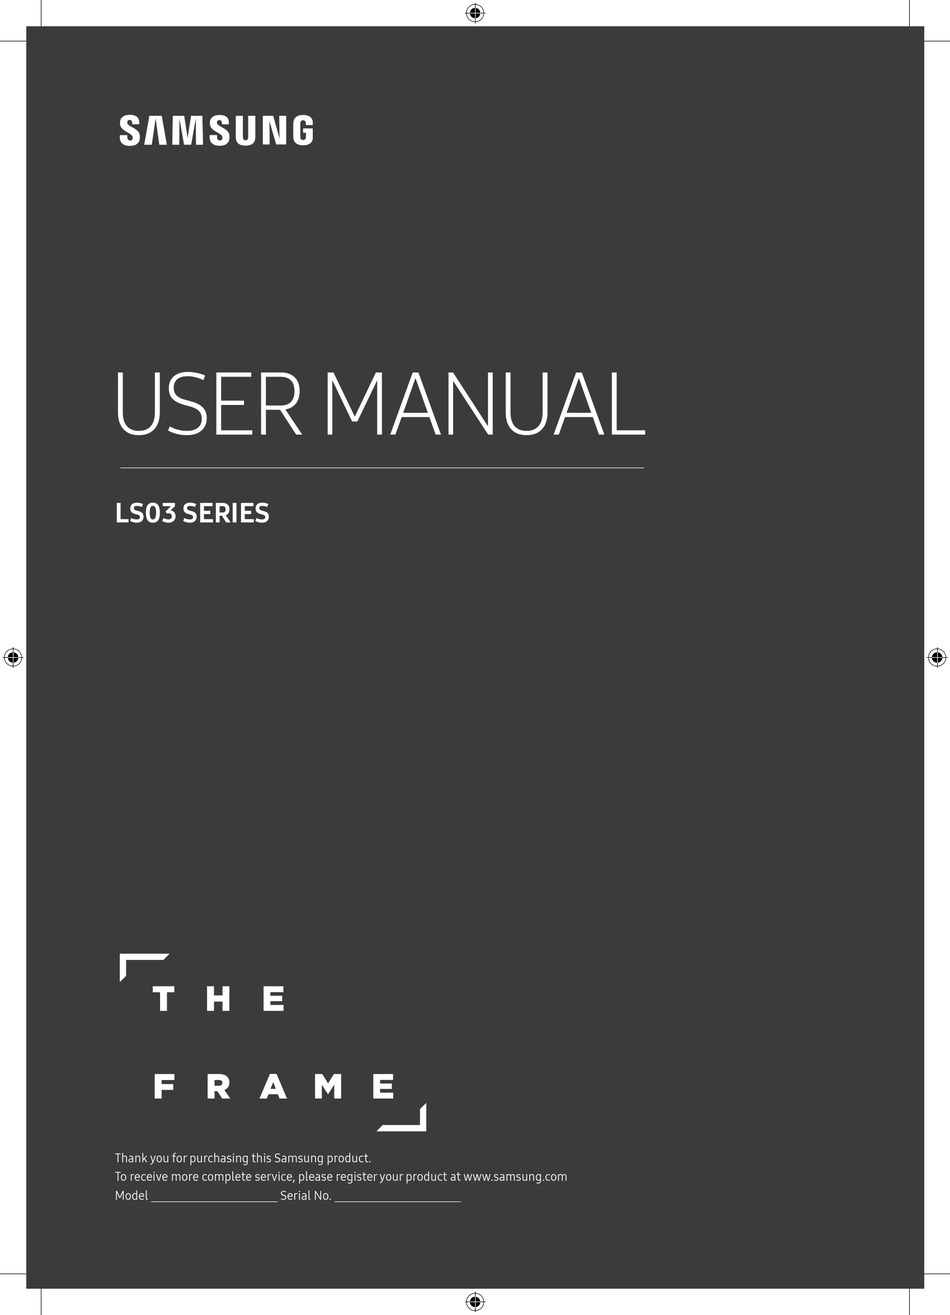 samsung-the-frame-qe55ls03-user-manual-pdf-download-manualslib